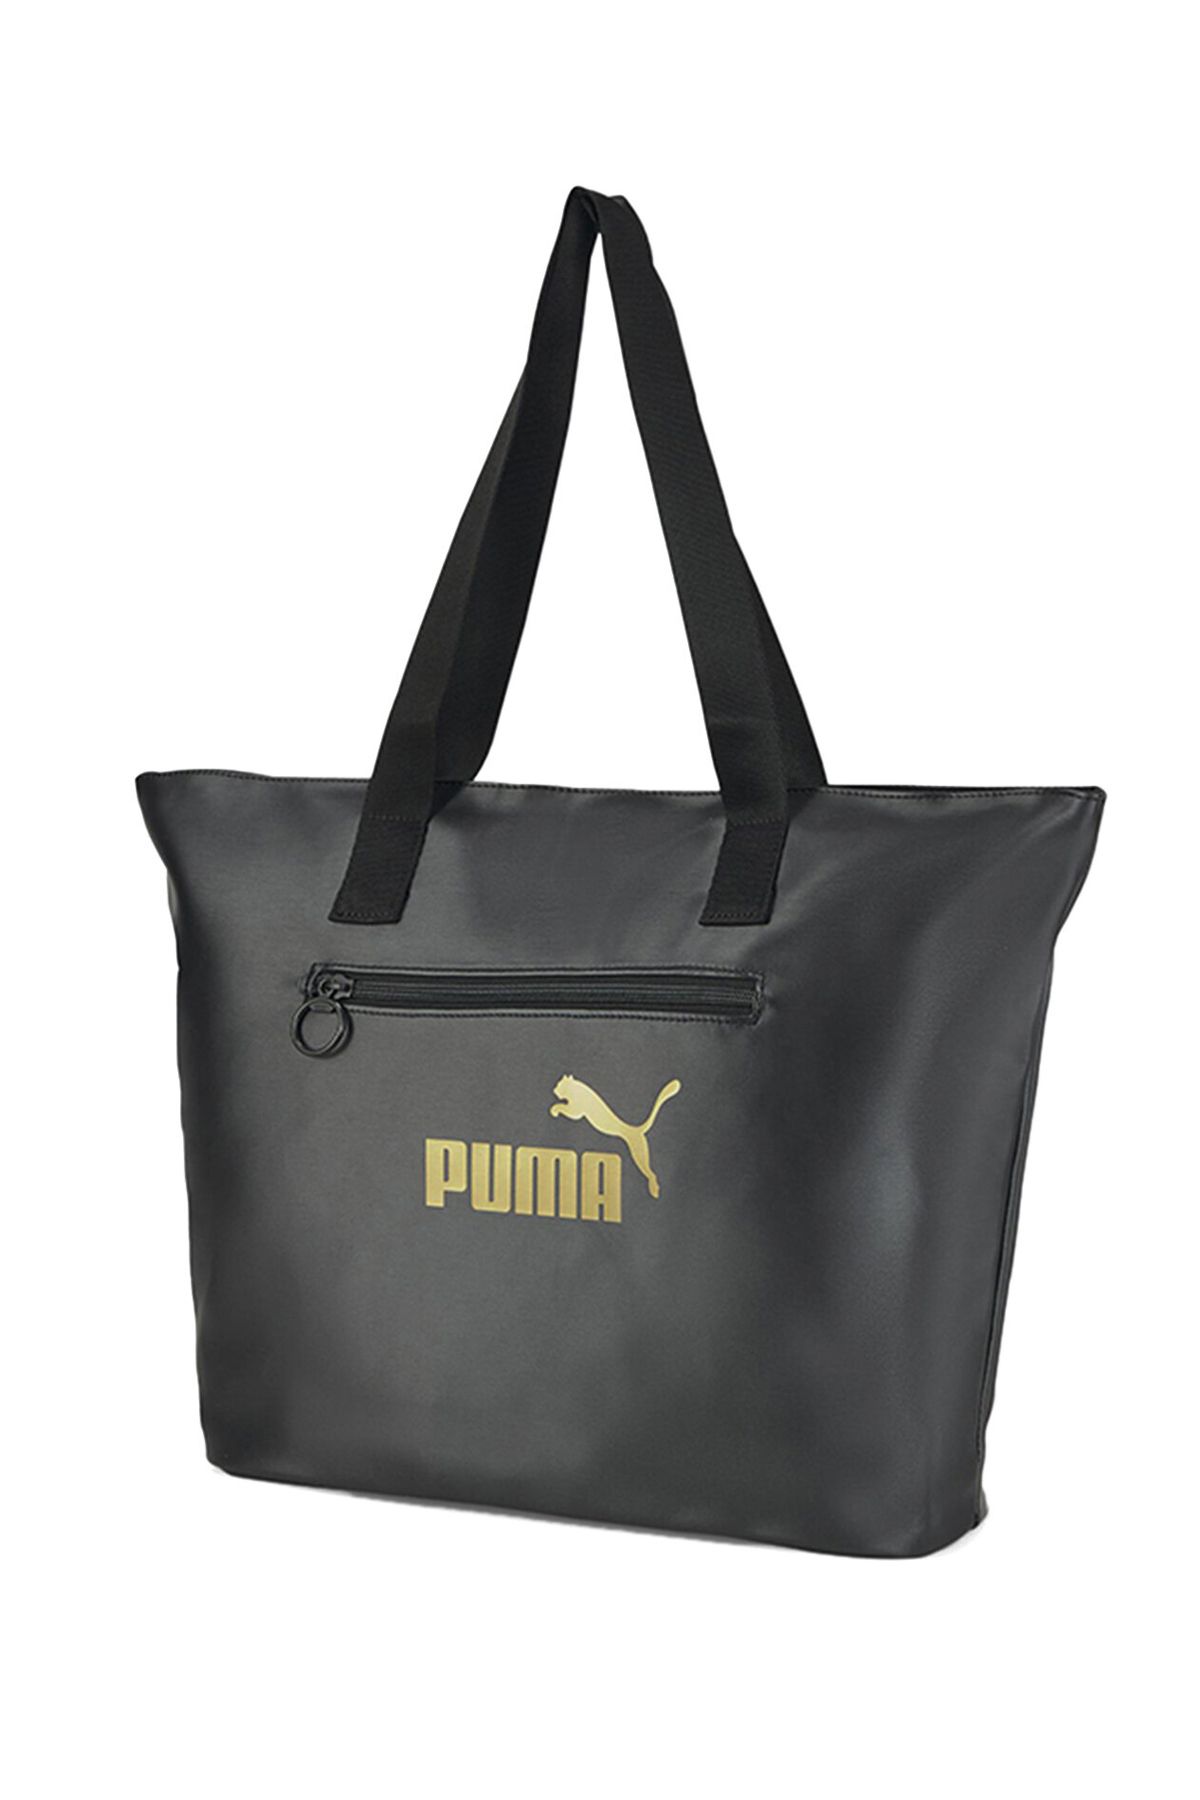 Puma Core Up Large Shopper Os Kadın Çanta 79485-01 Black